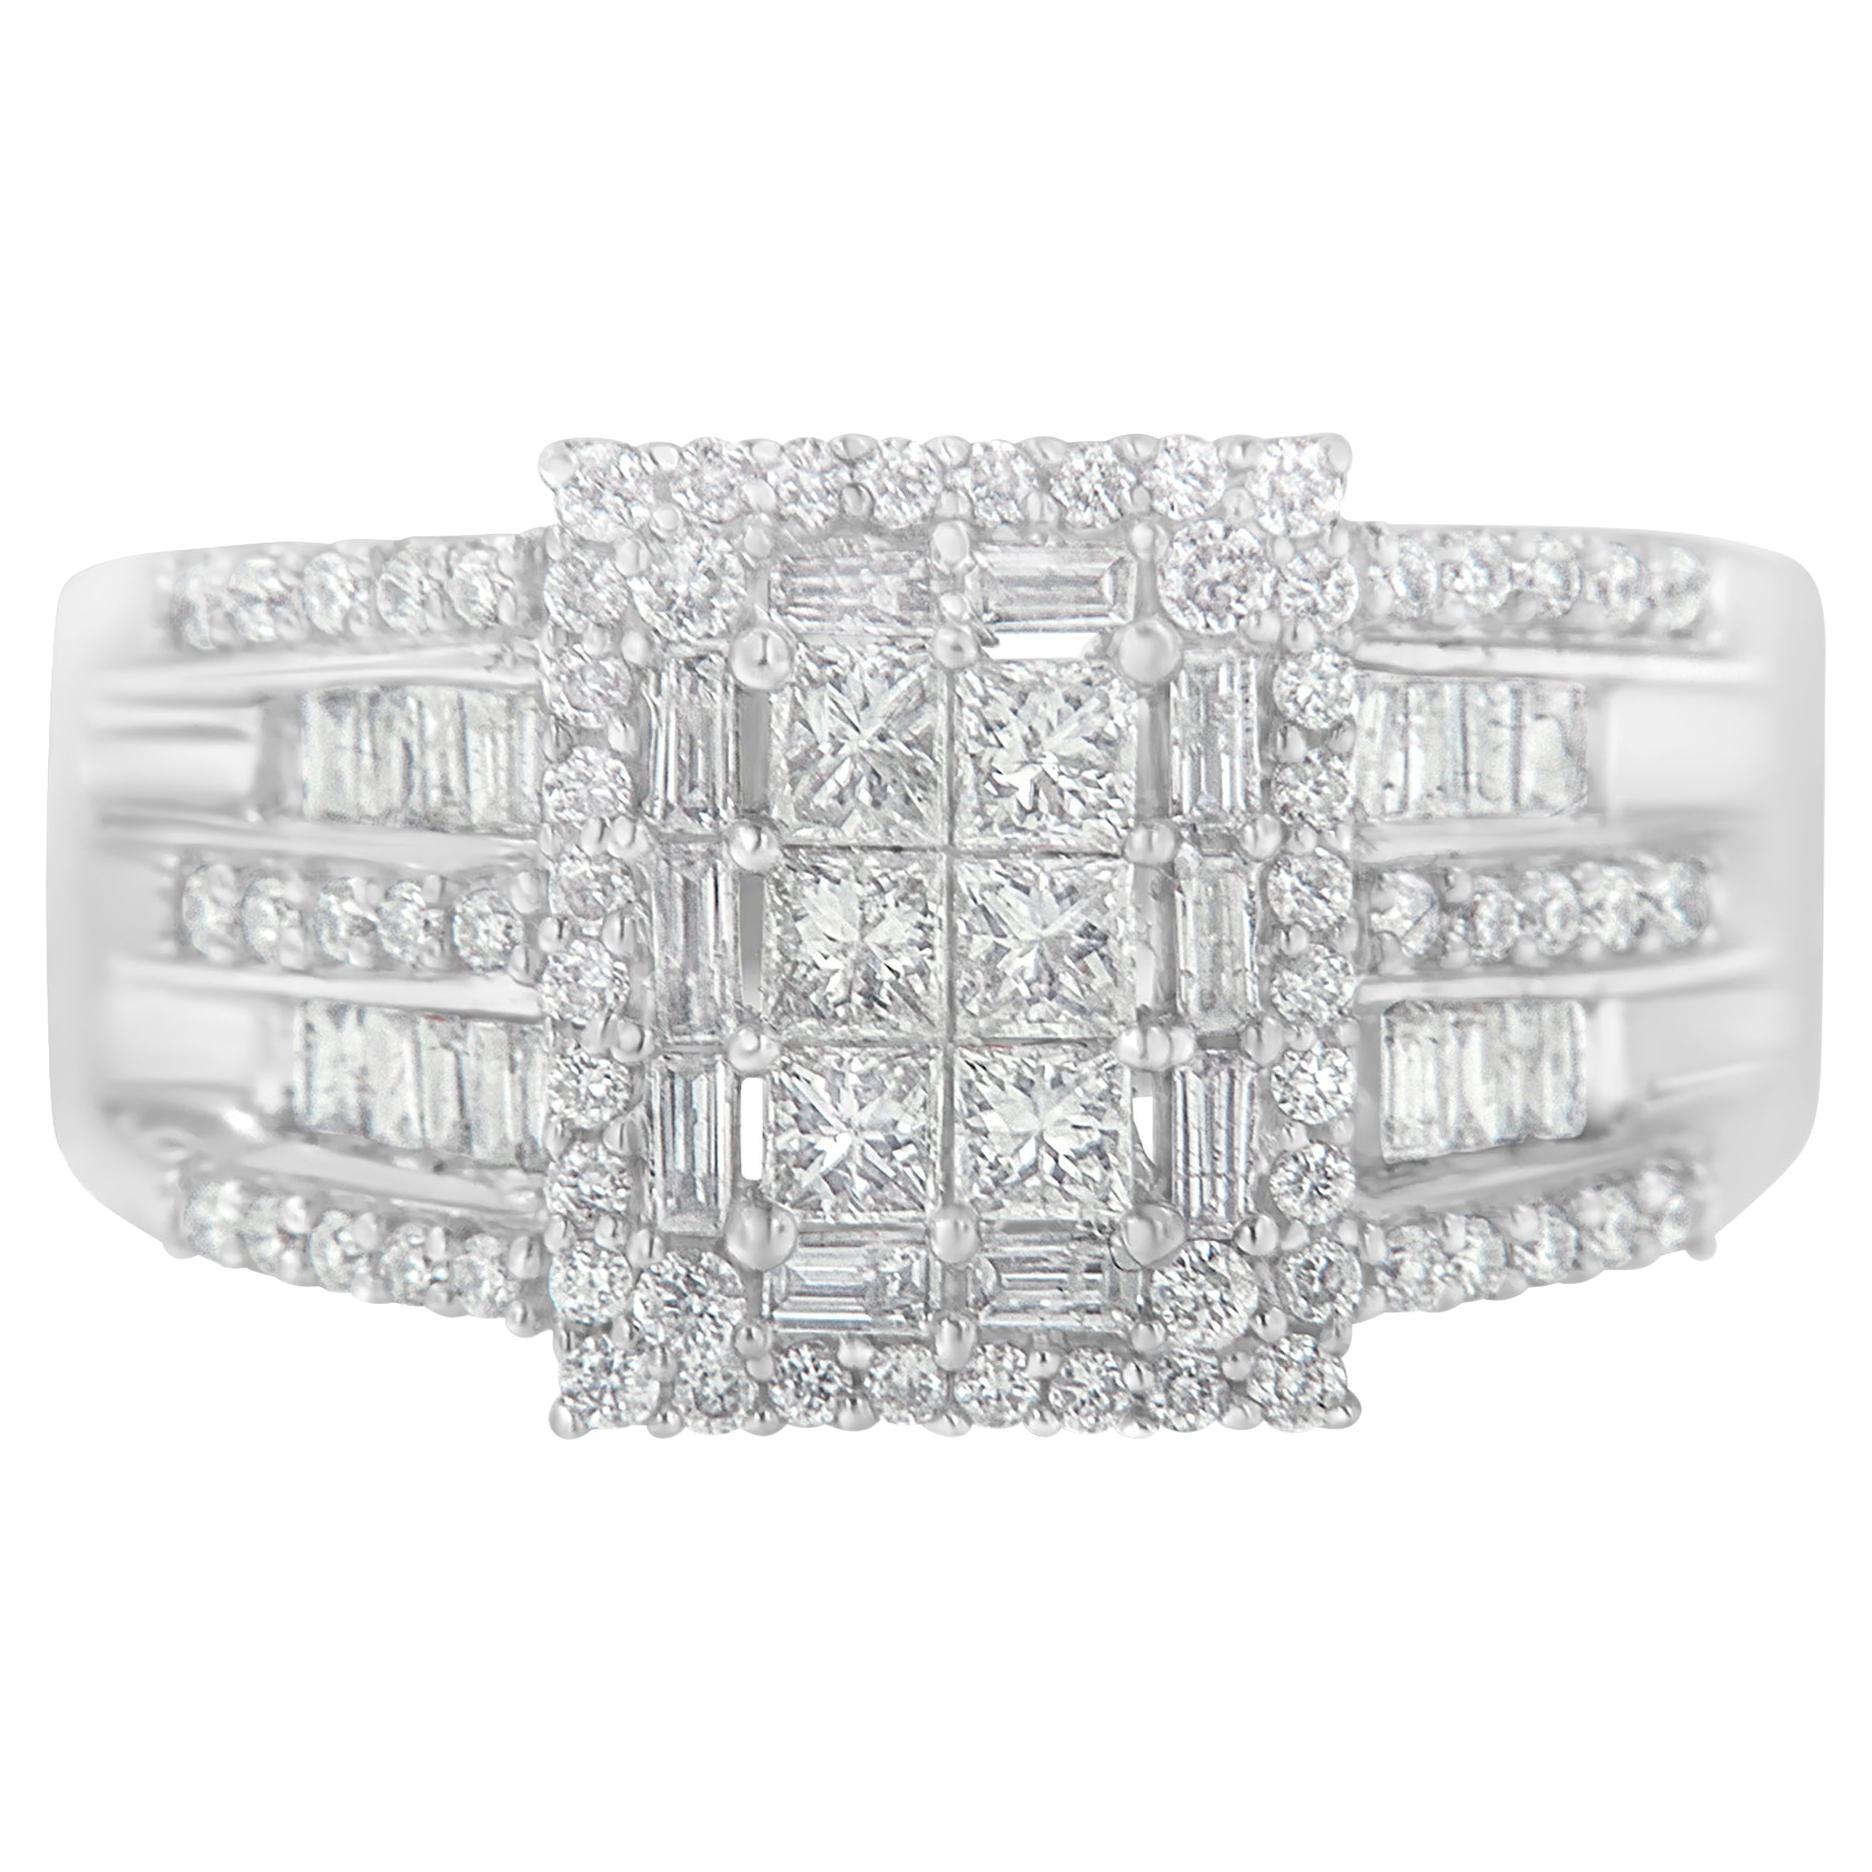 10K White Gold 1.0 Carat Diamond Cluster Ring For Sale